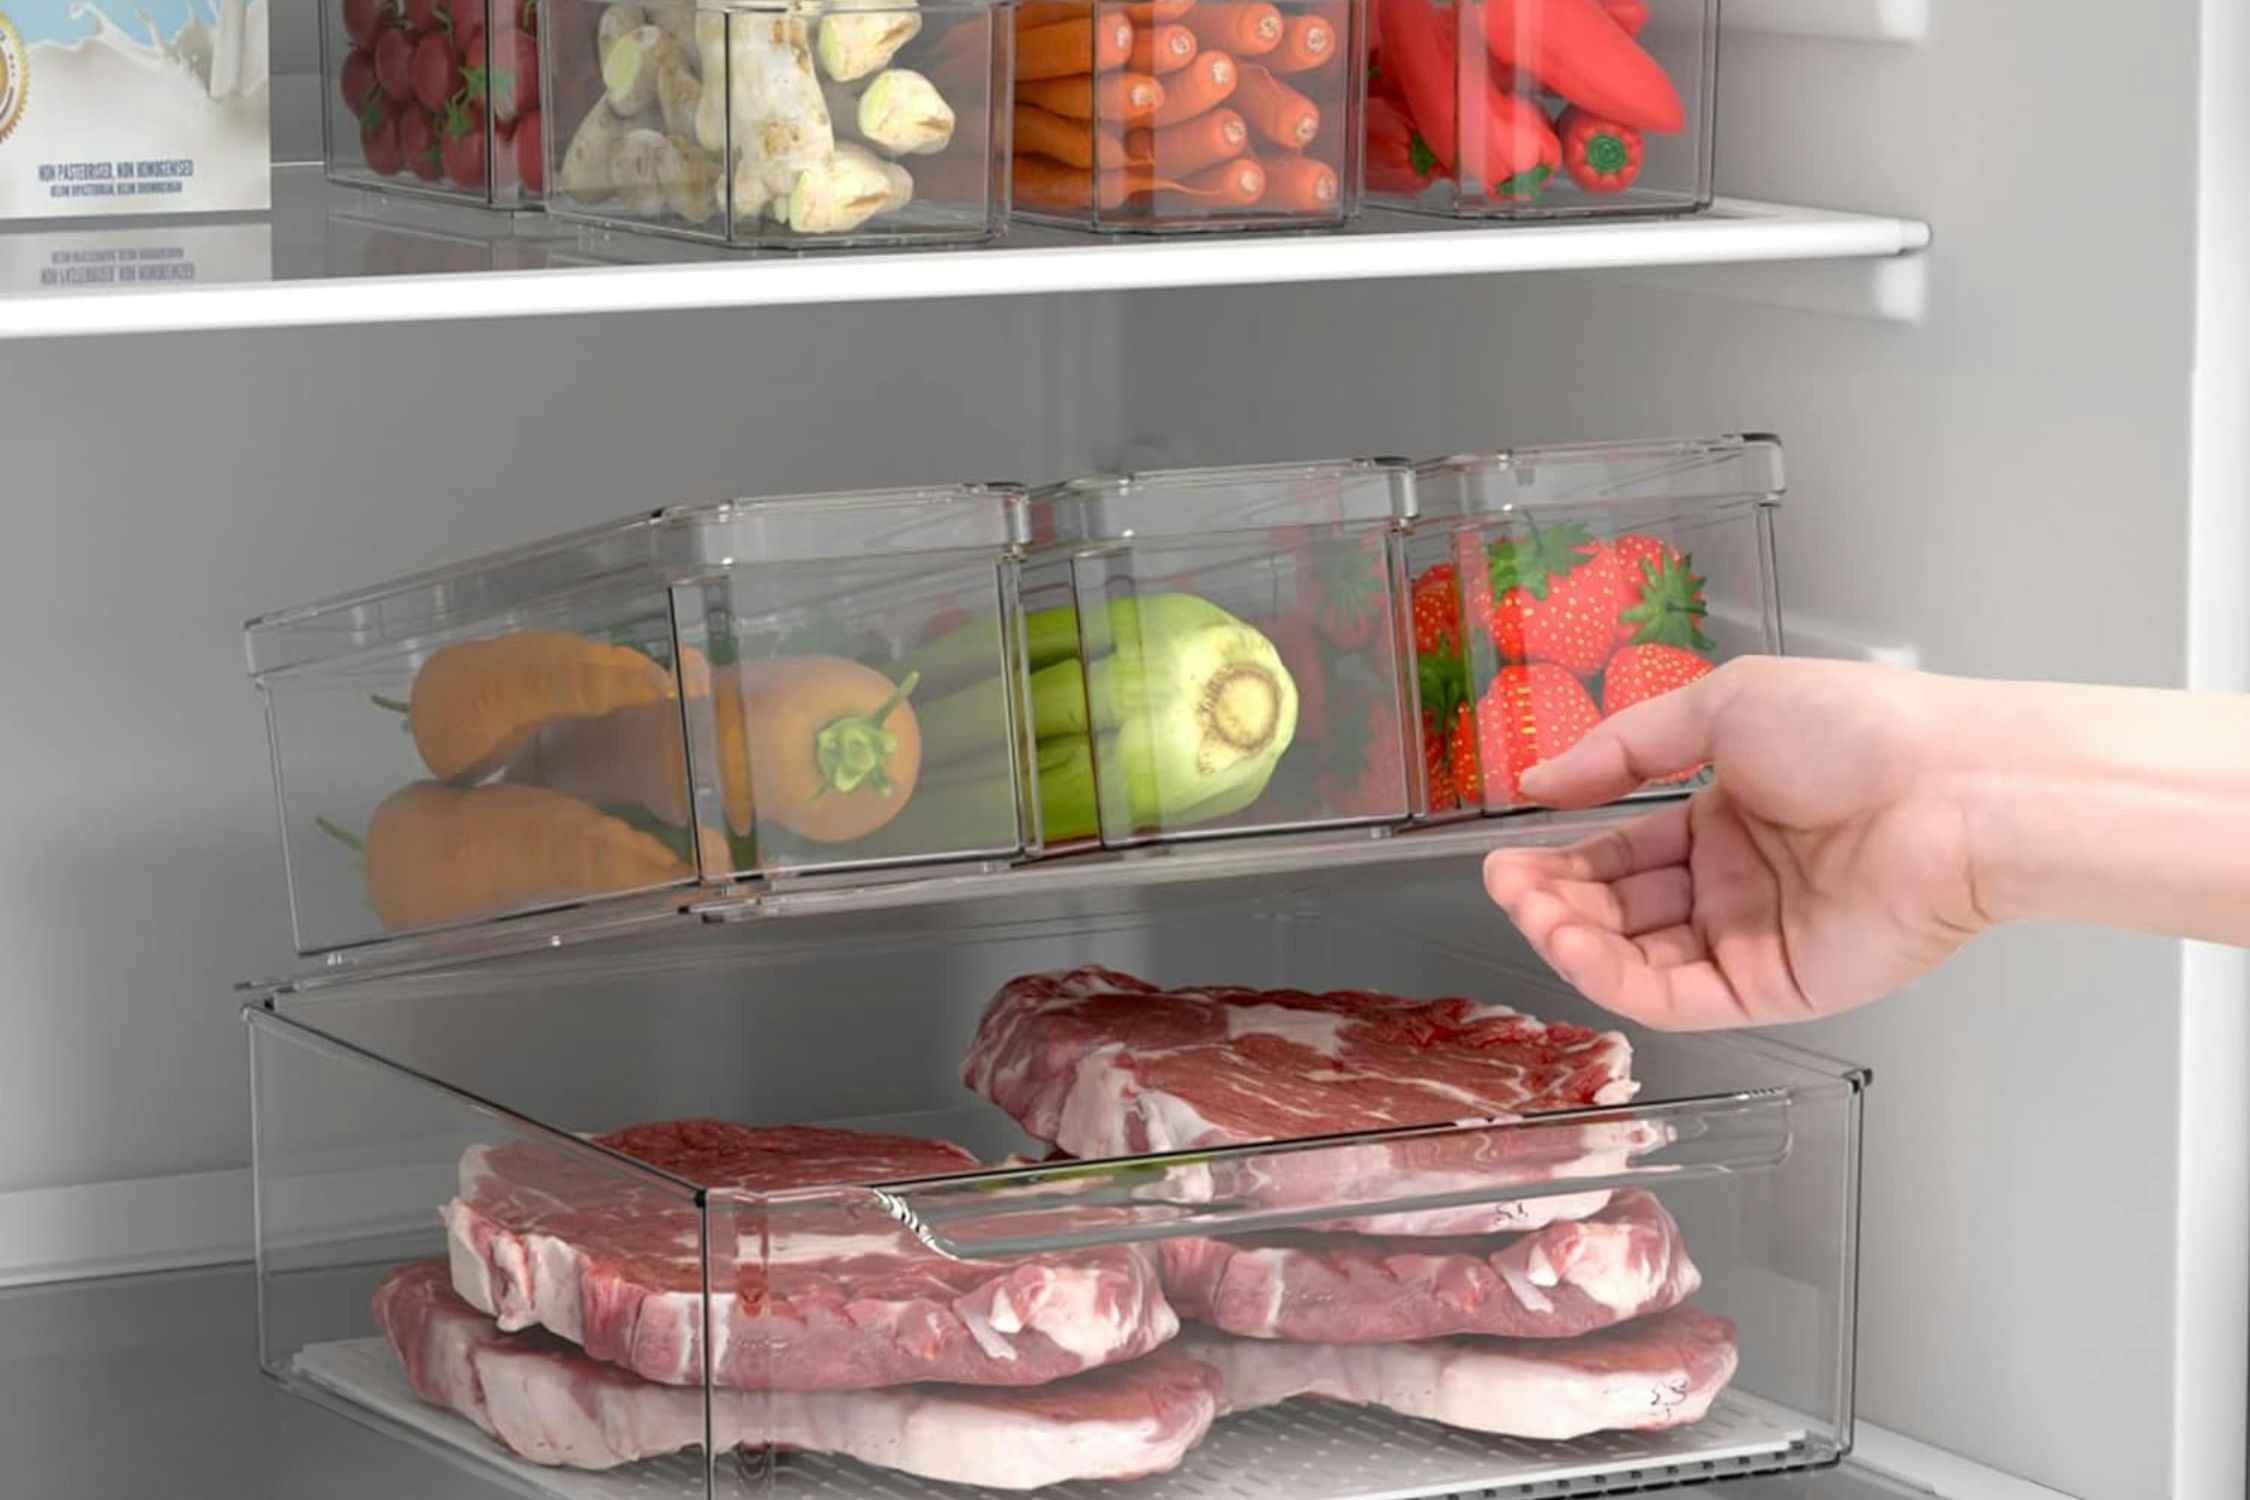 10-Piece Refrigerator Organizer Bin Set, Just $20 on Amazon 